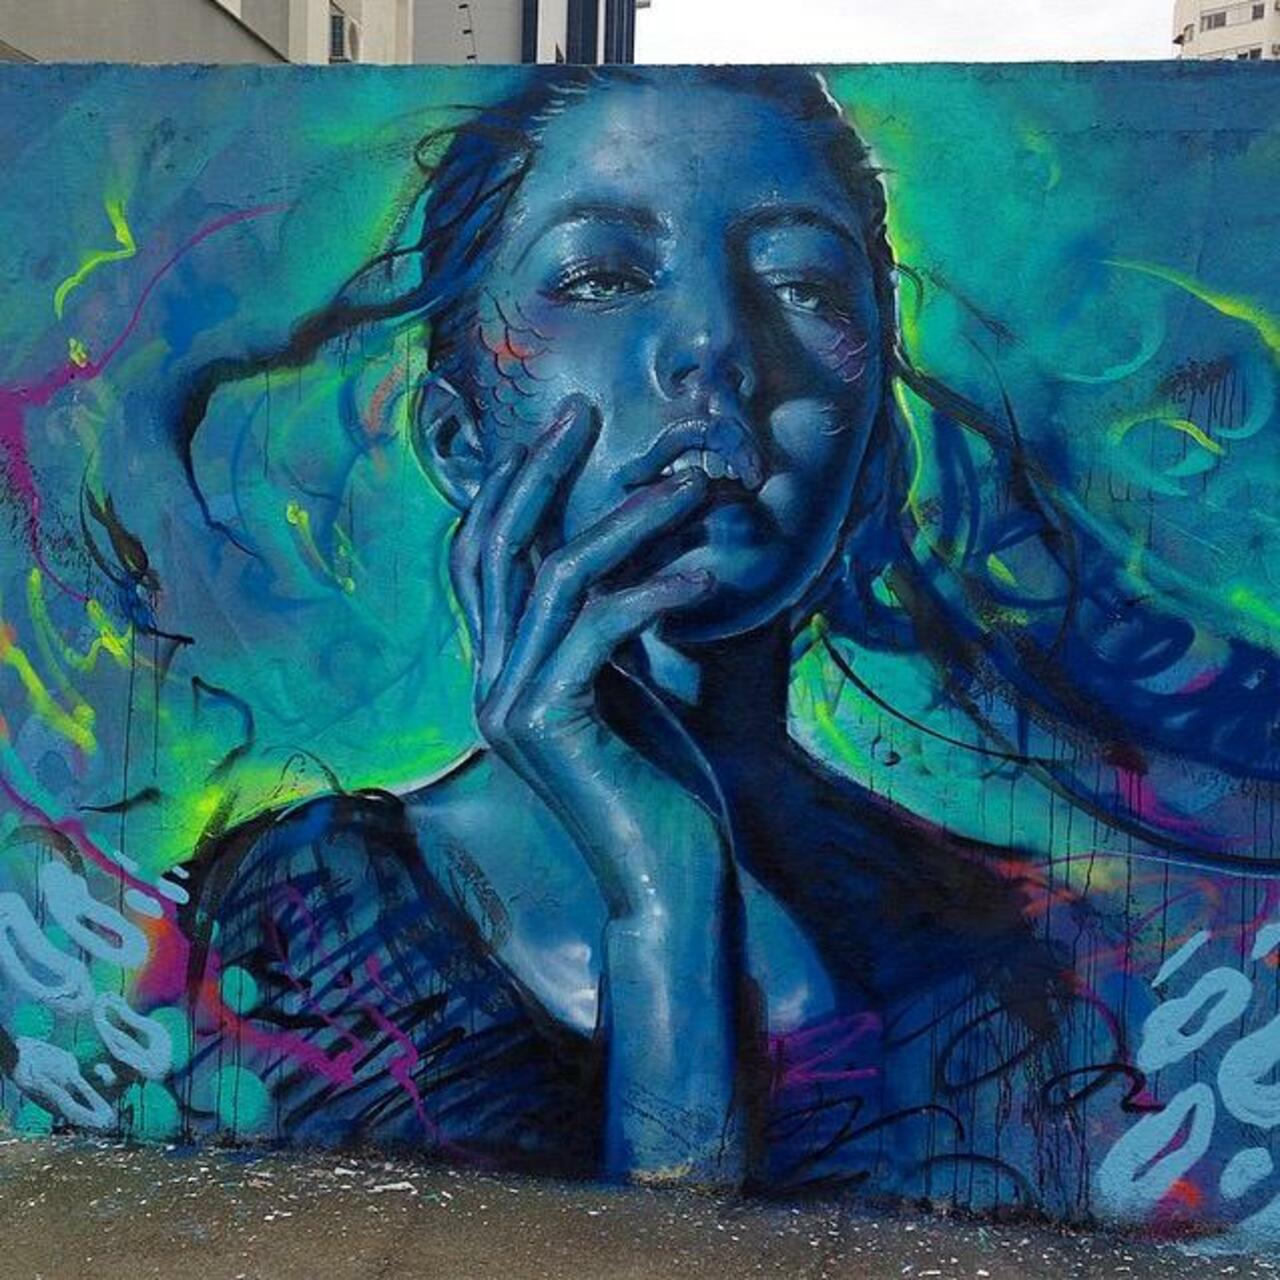 Thiago Valdi new Street Art piece titled 'Day Dreamer'

#art #mural #graffiti #streetart http://t.co/btREqq2zVR